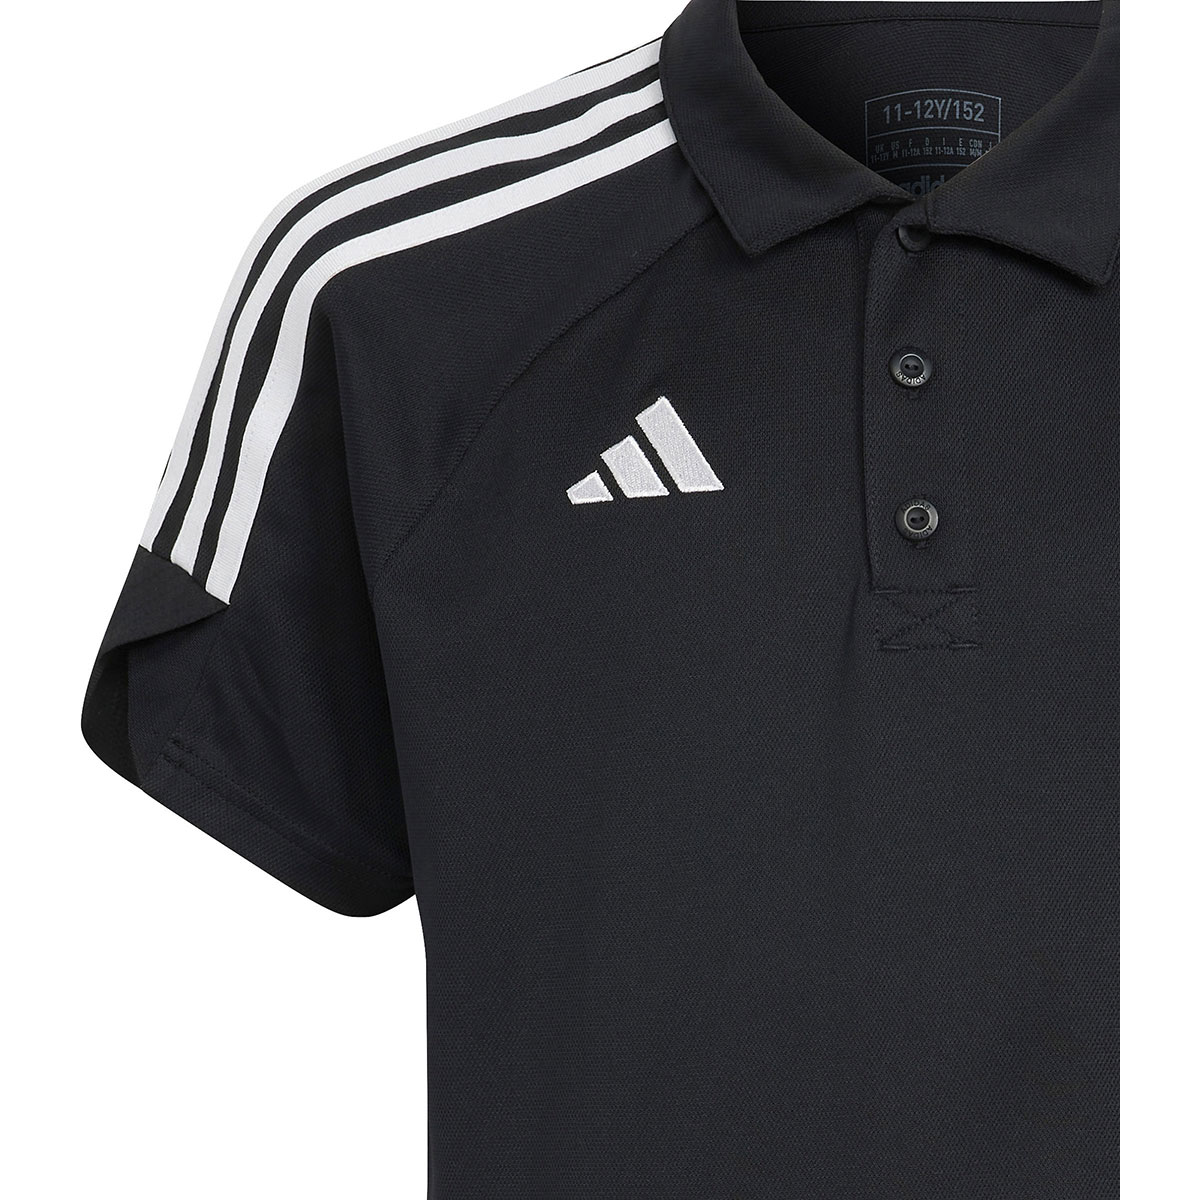 Adidas Kinder Poloshirt Tiro 23 schwarz